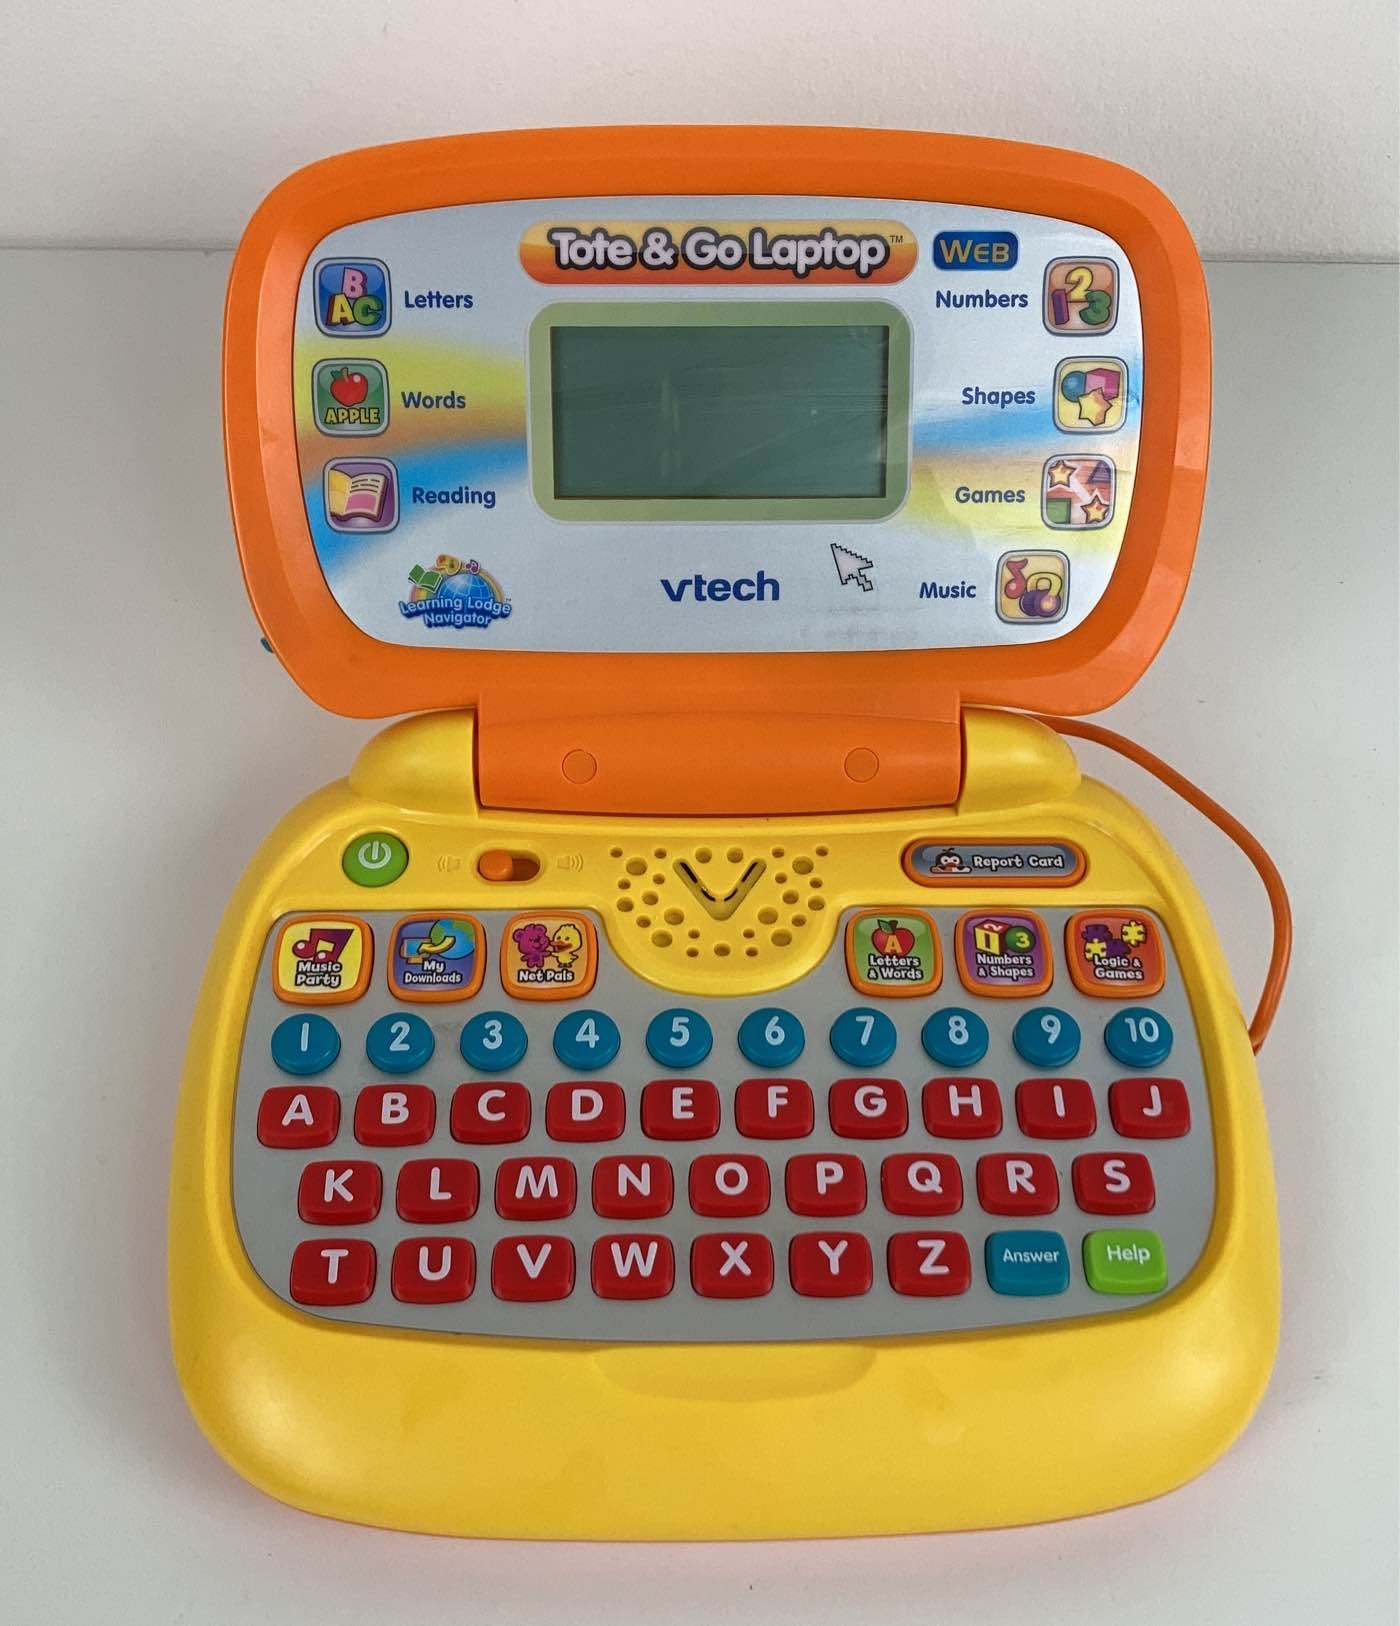 Vtech Tote&Go laptop - arts & crafts - by owner - sale - craigslist